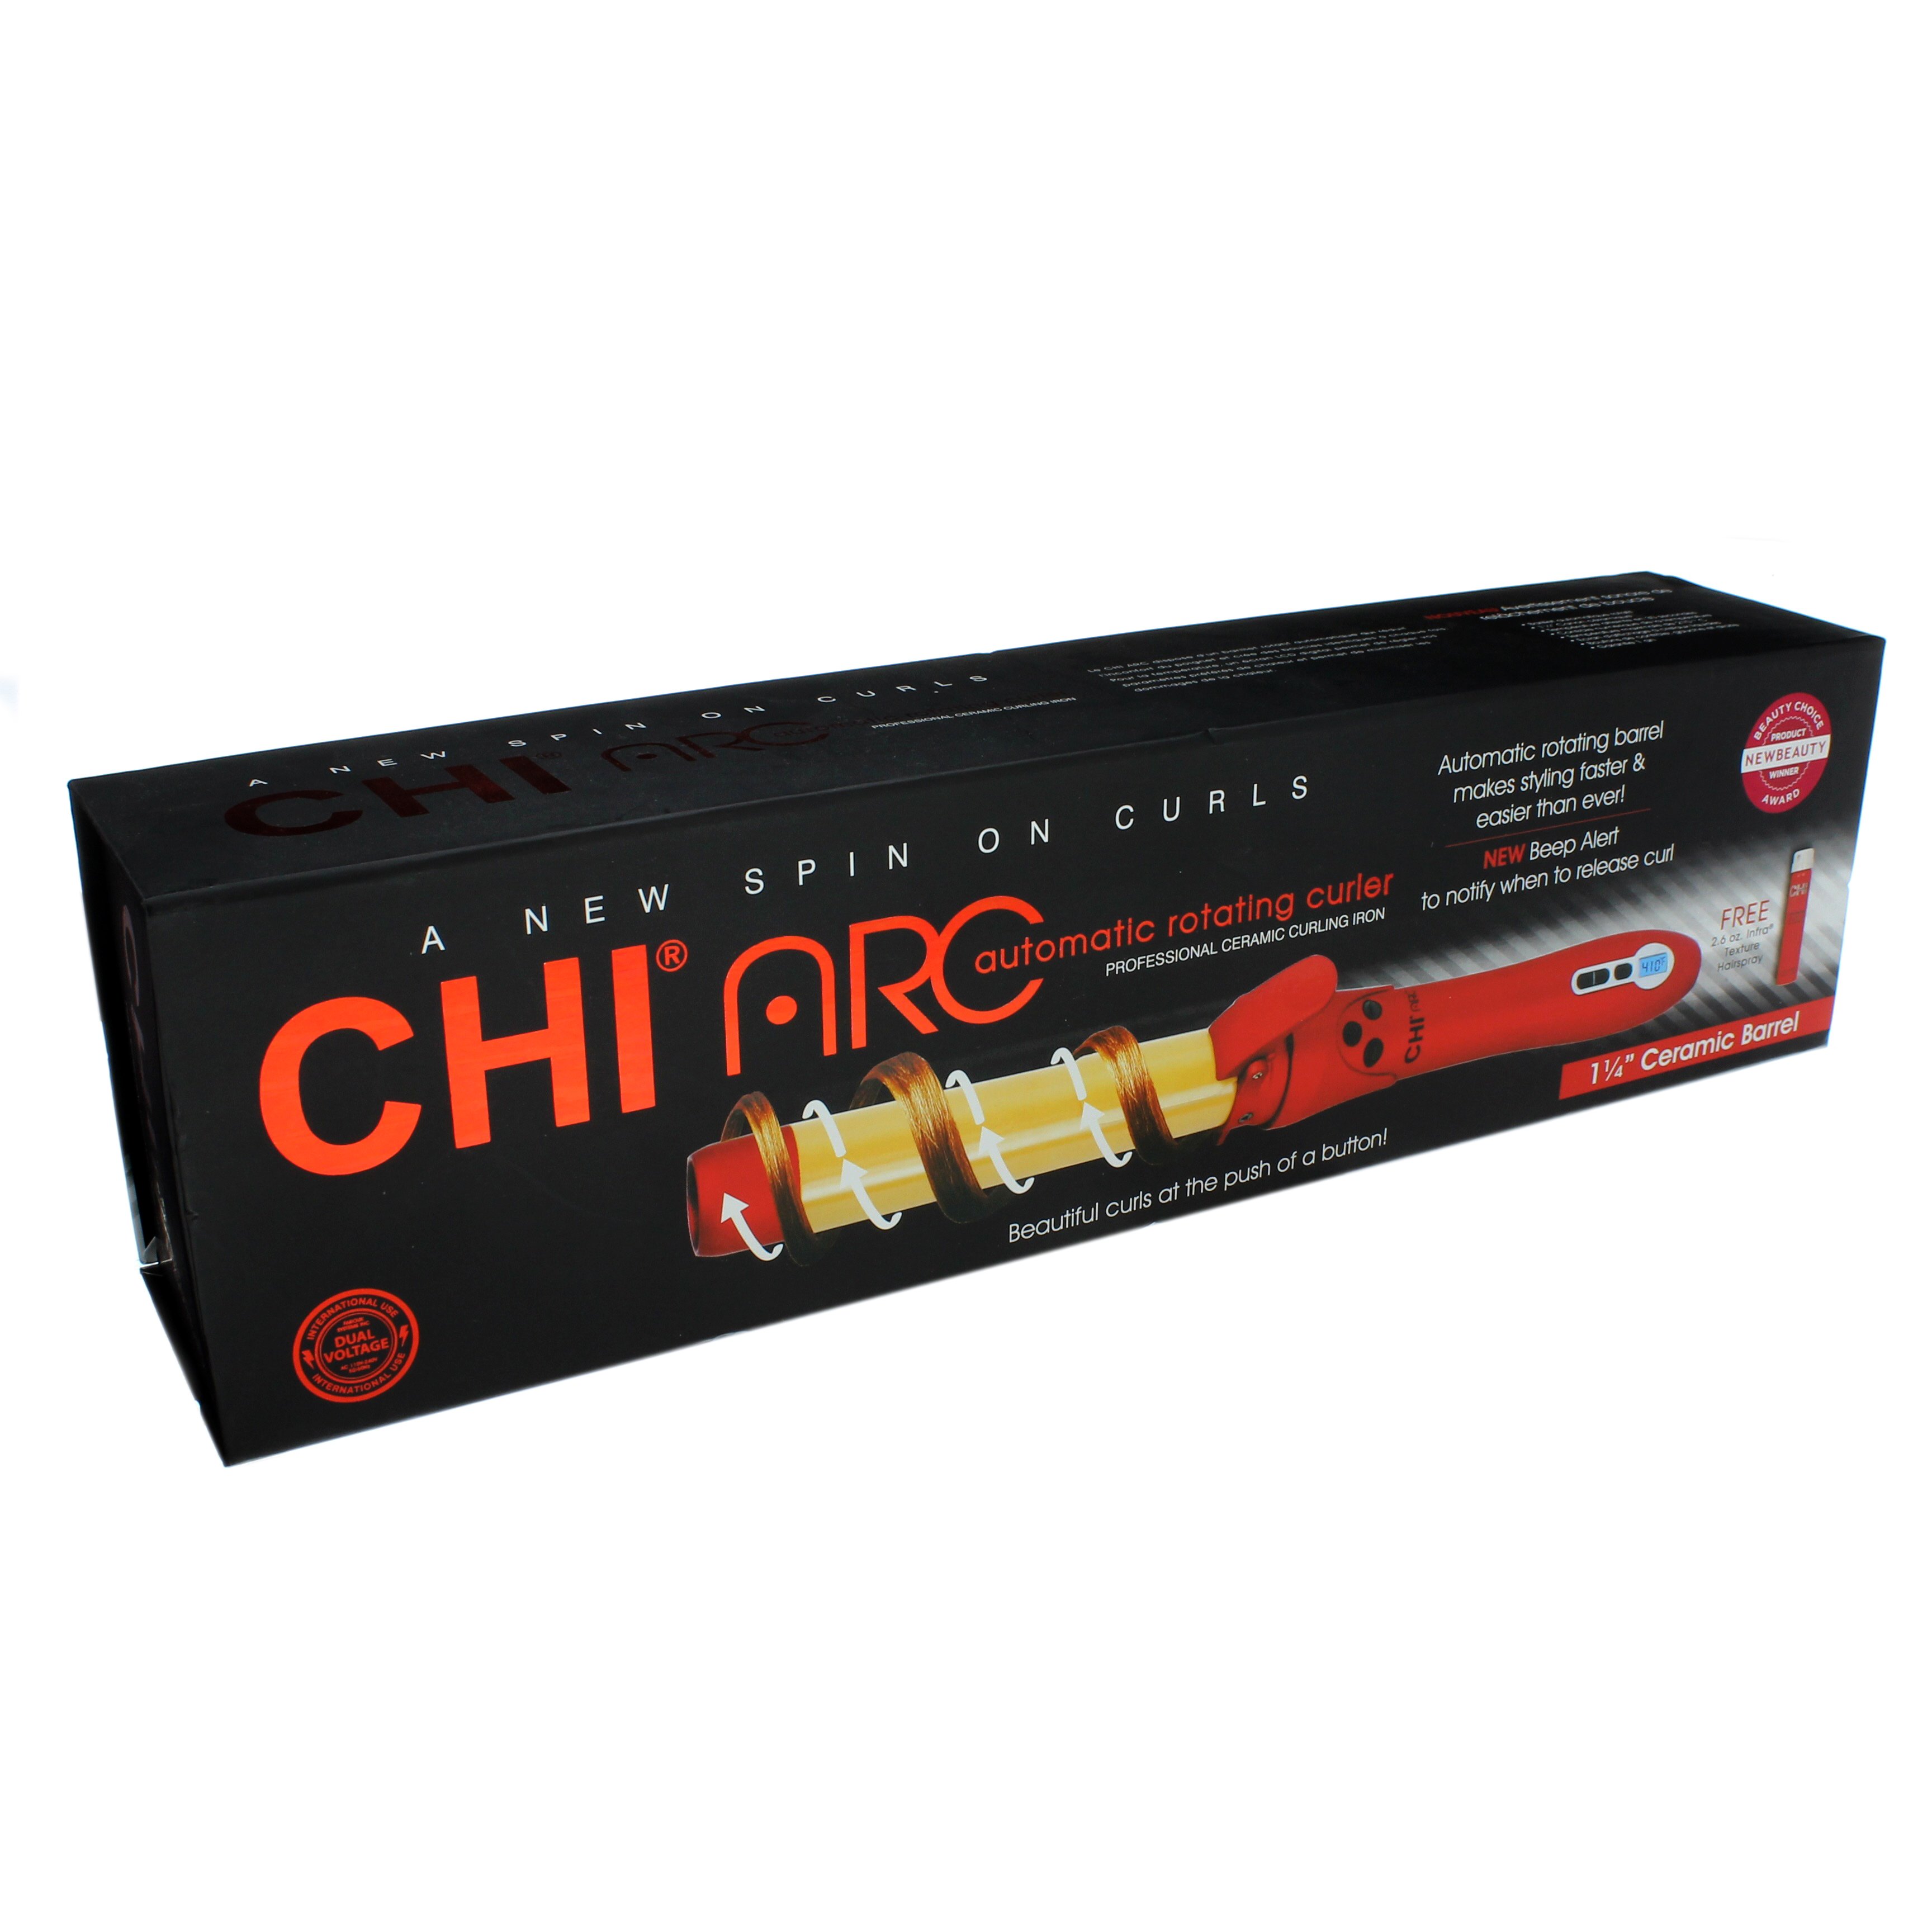 CHI Arc Ceramic Curling Iron Kit - Shop Hair Care at H-E-B